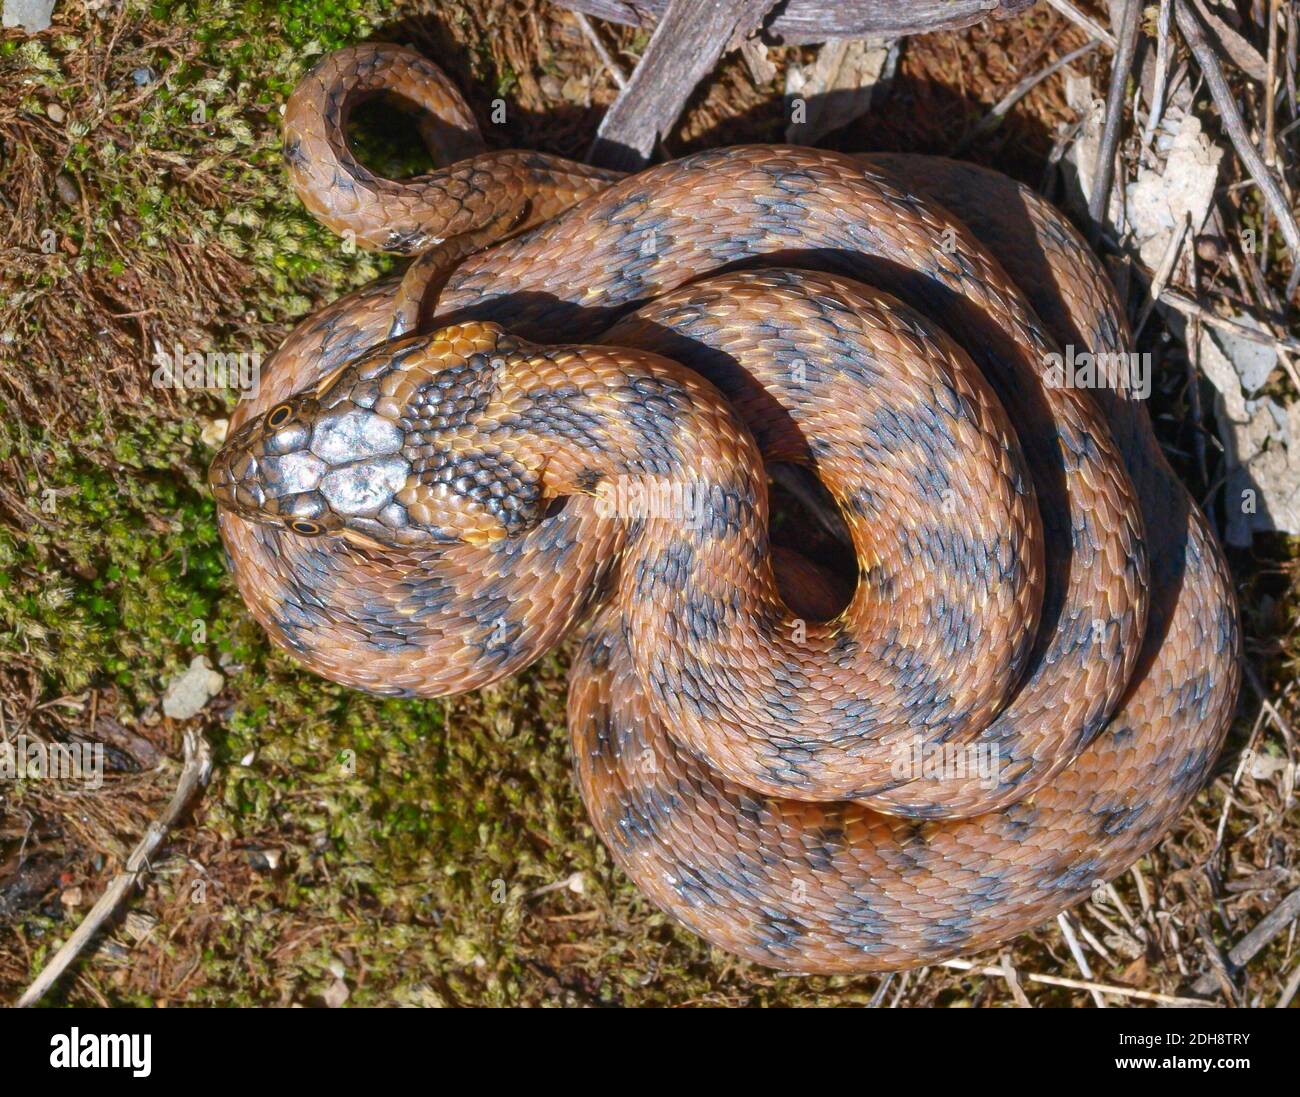 Serpent vipéral, Natrix maura en espagne Banque D'Images